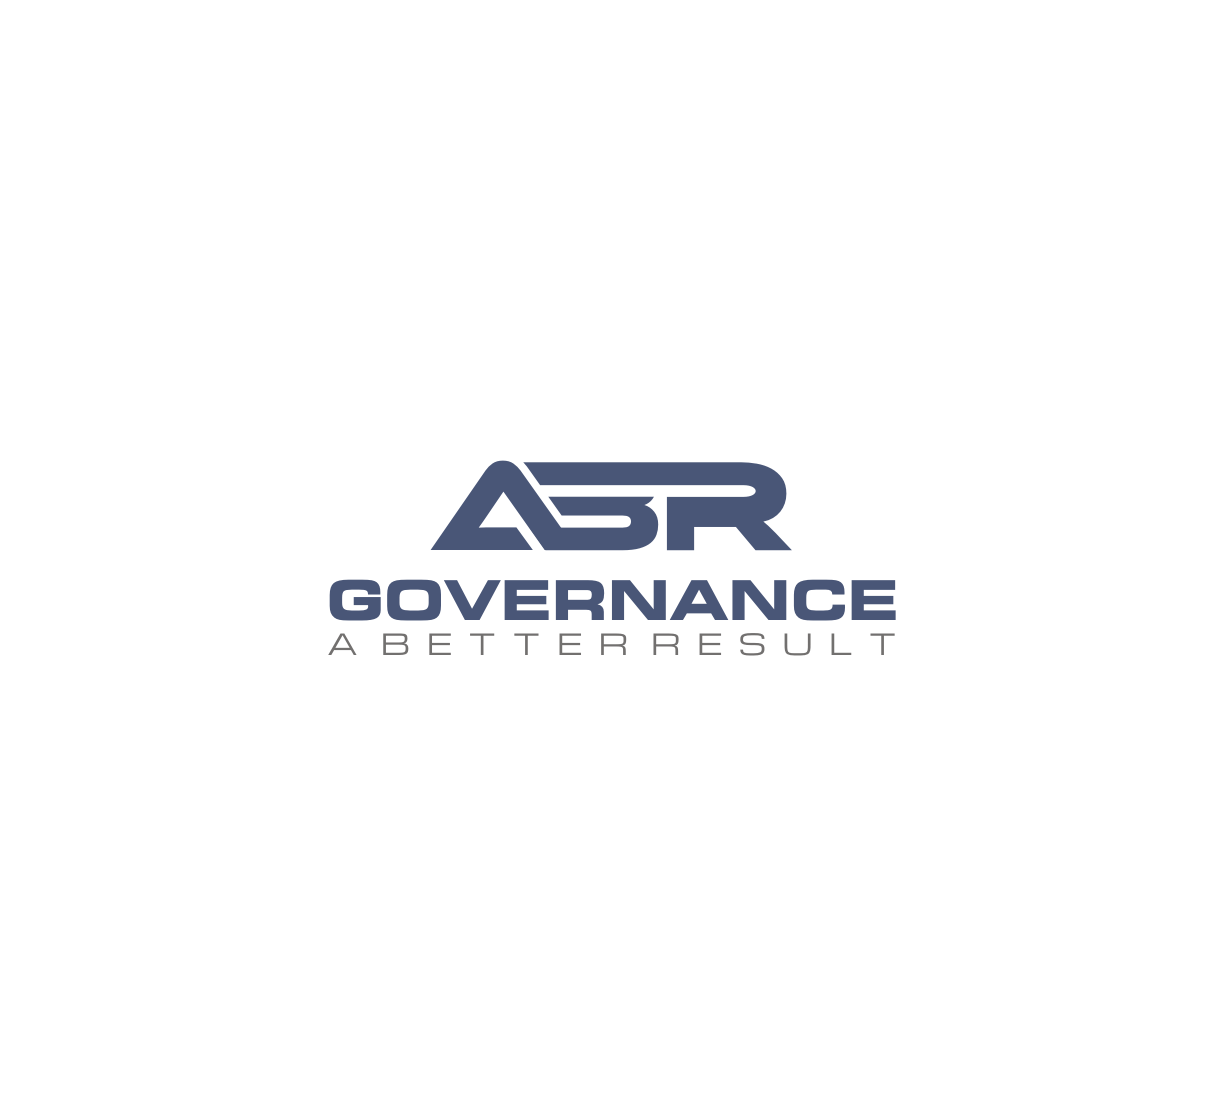 ABR Logo - Serious, Professional, Business Consultant Logo Design for ABR